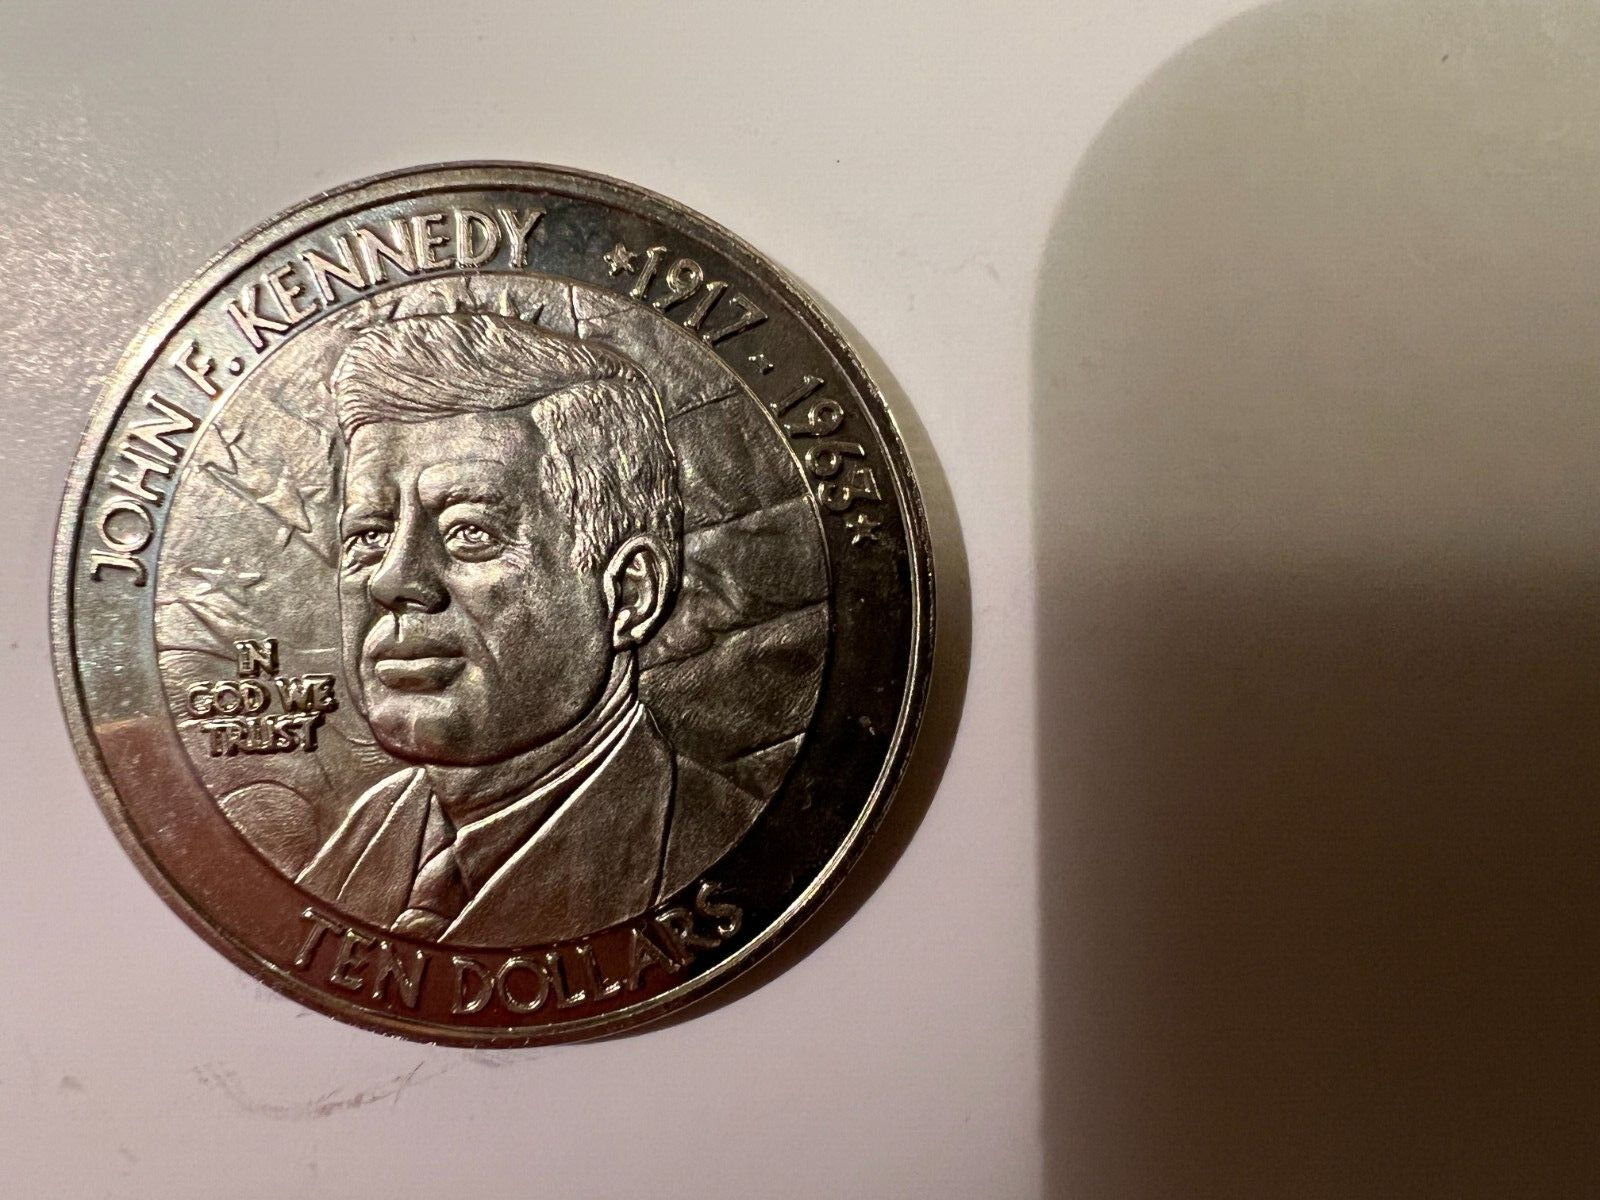 2003 Republic of Liberia $10 John F. Kennedy, 1917-1963 US President Proof Coin